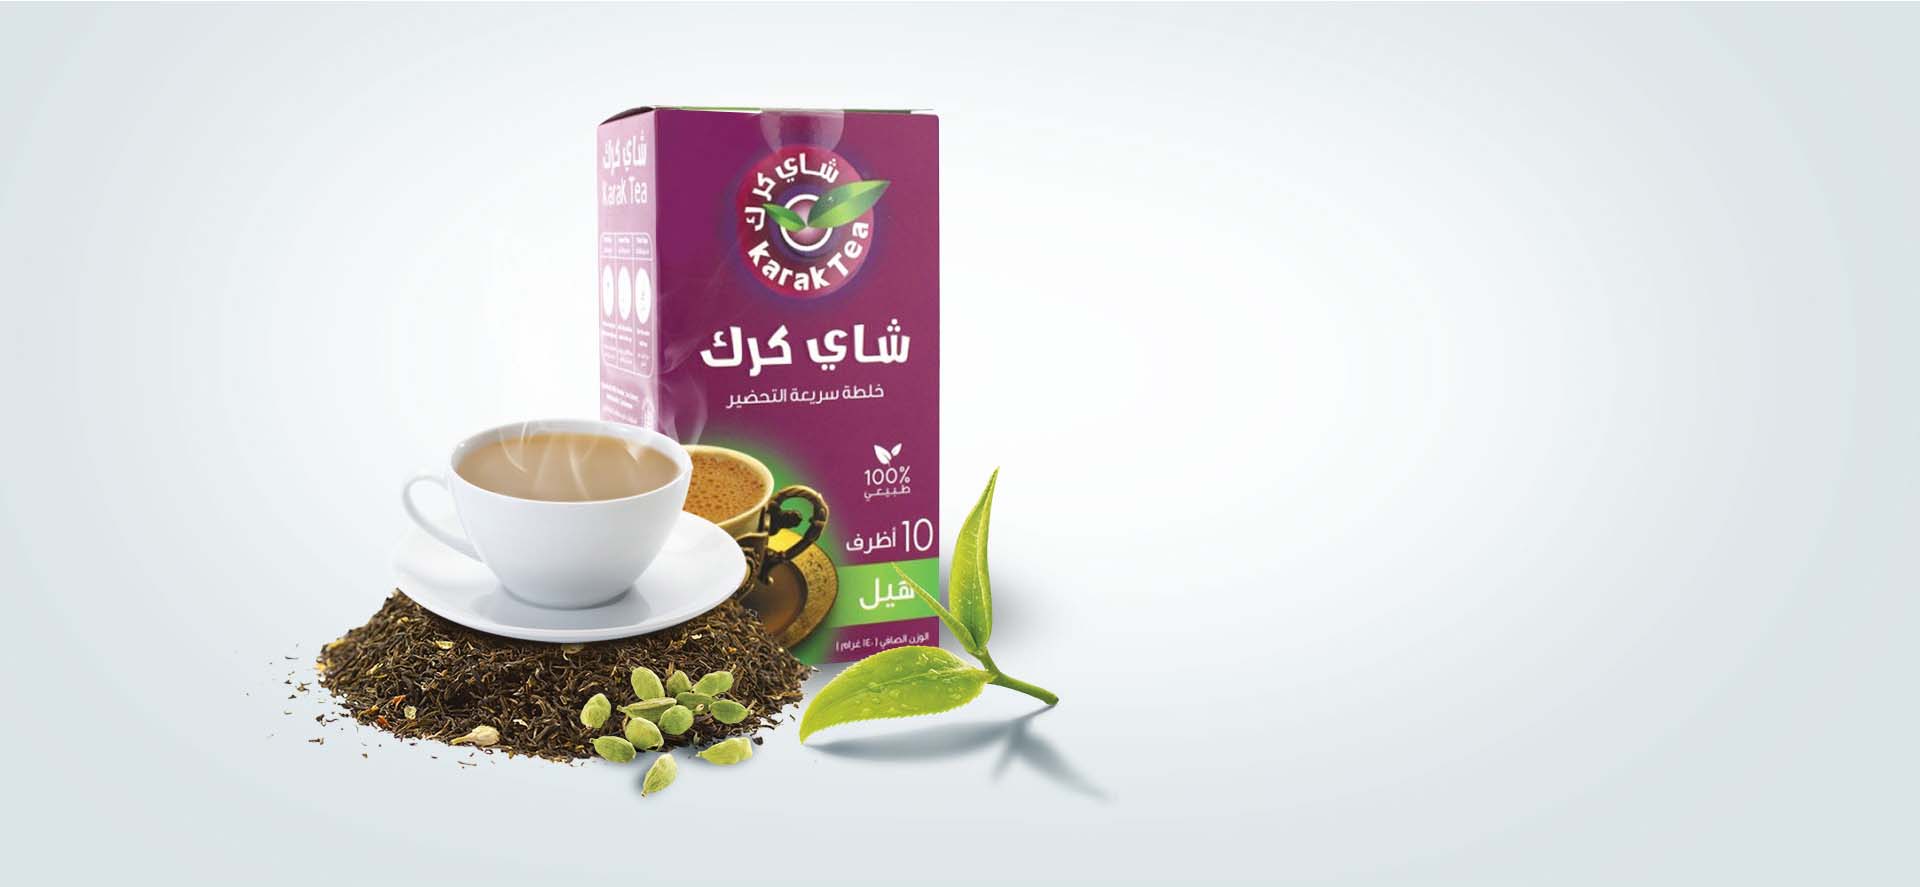 Karak-tea-products